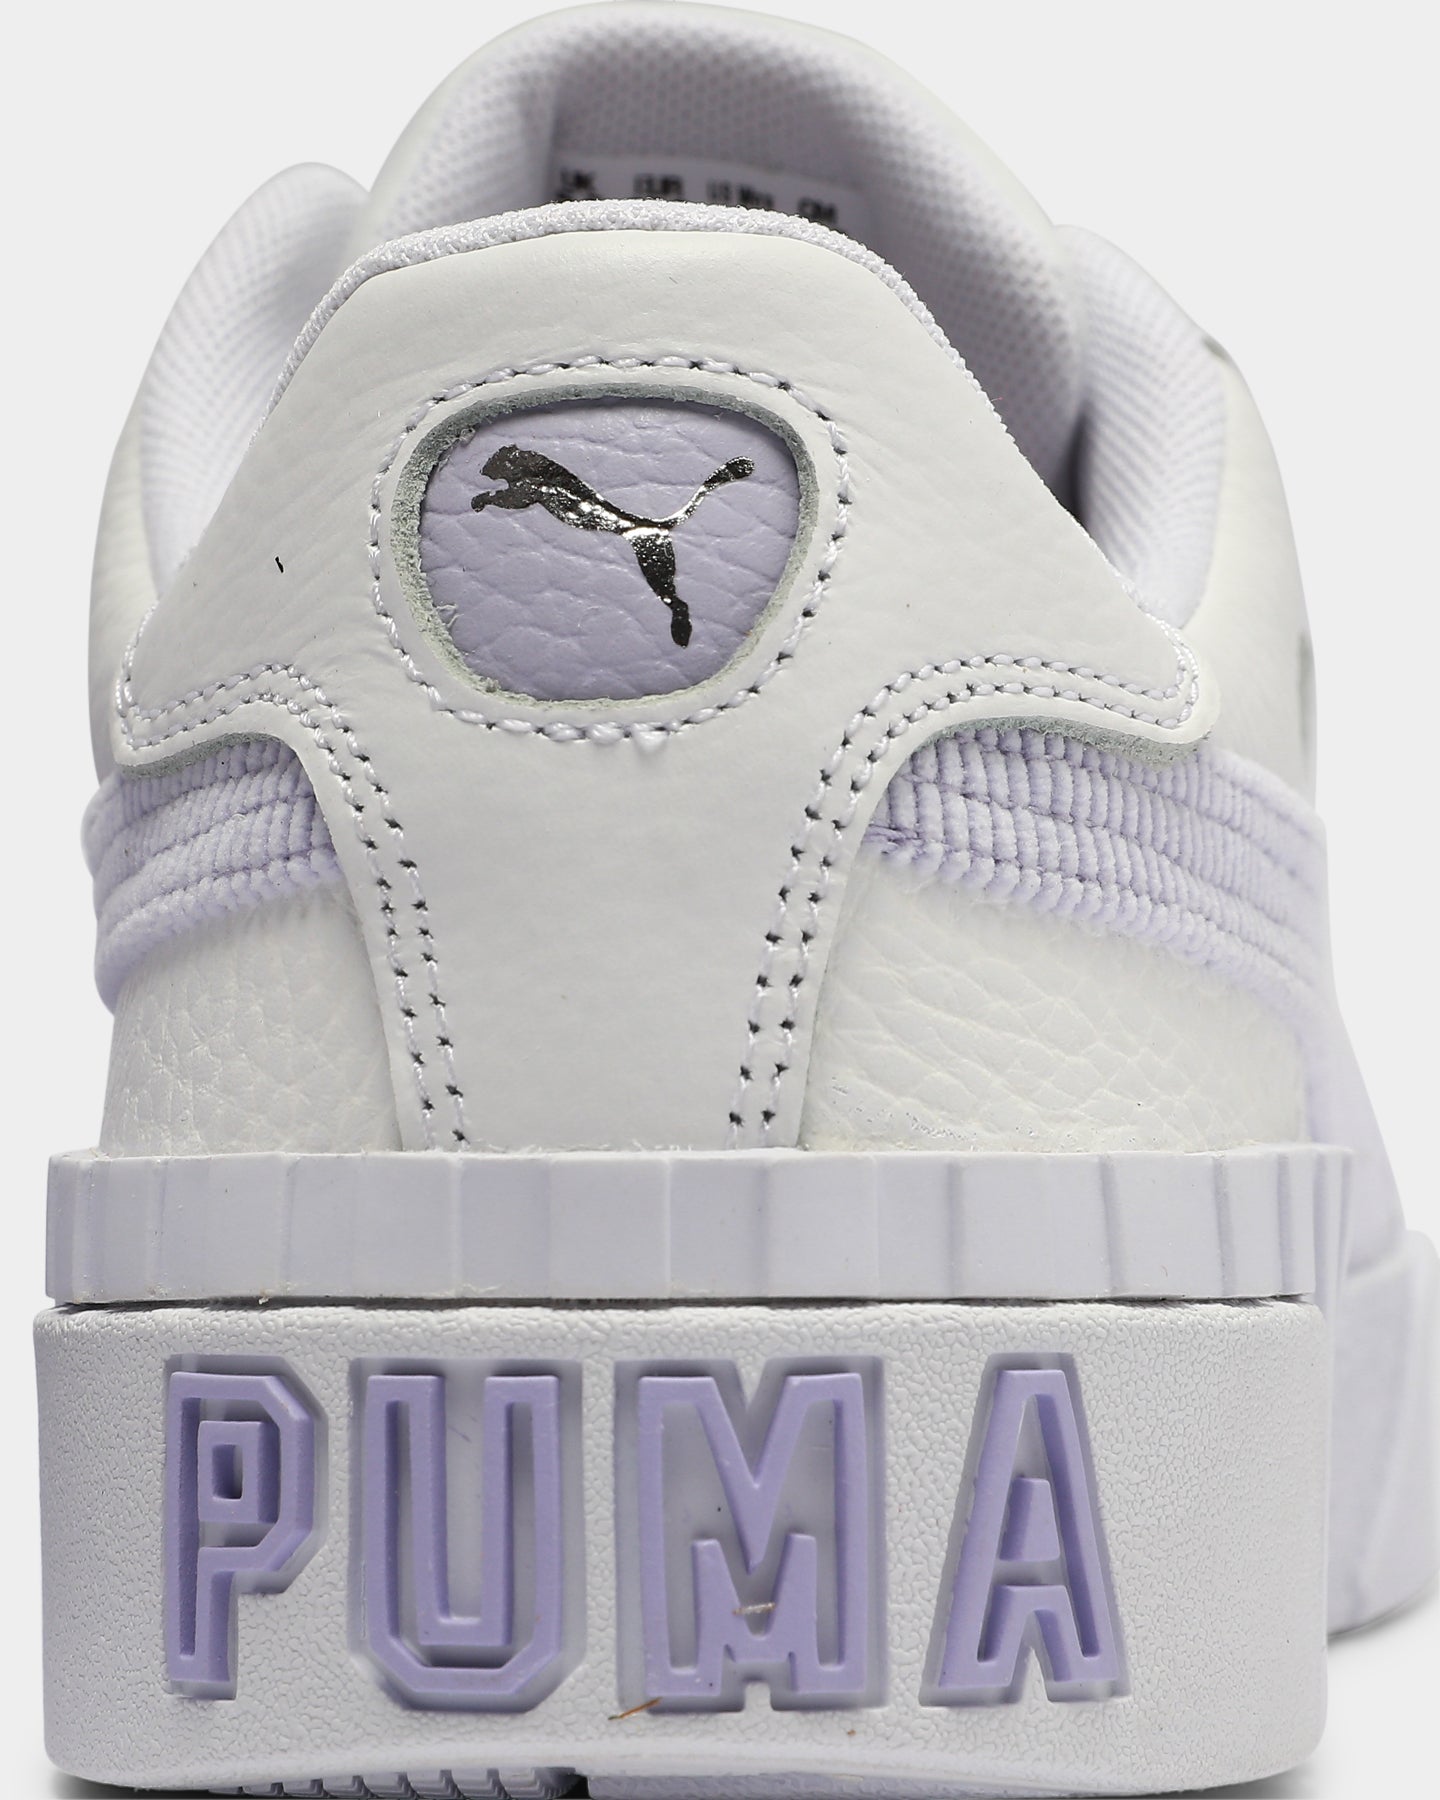 purple pumas women's